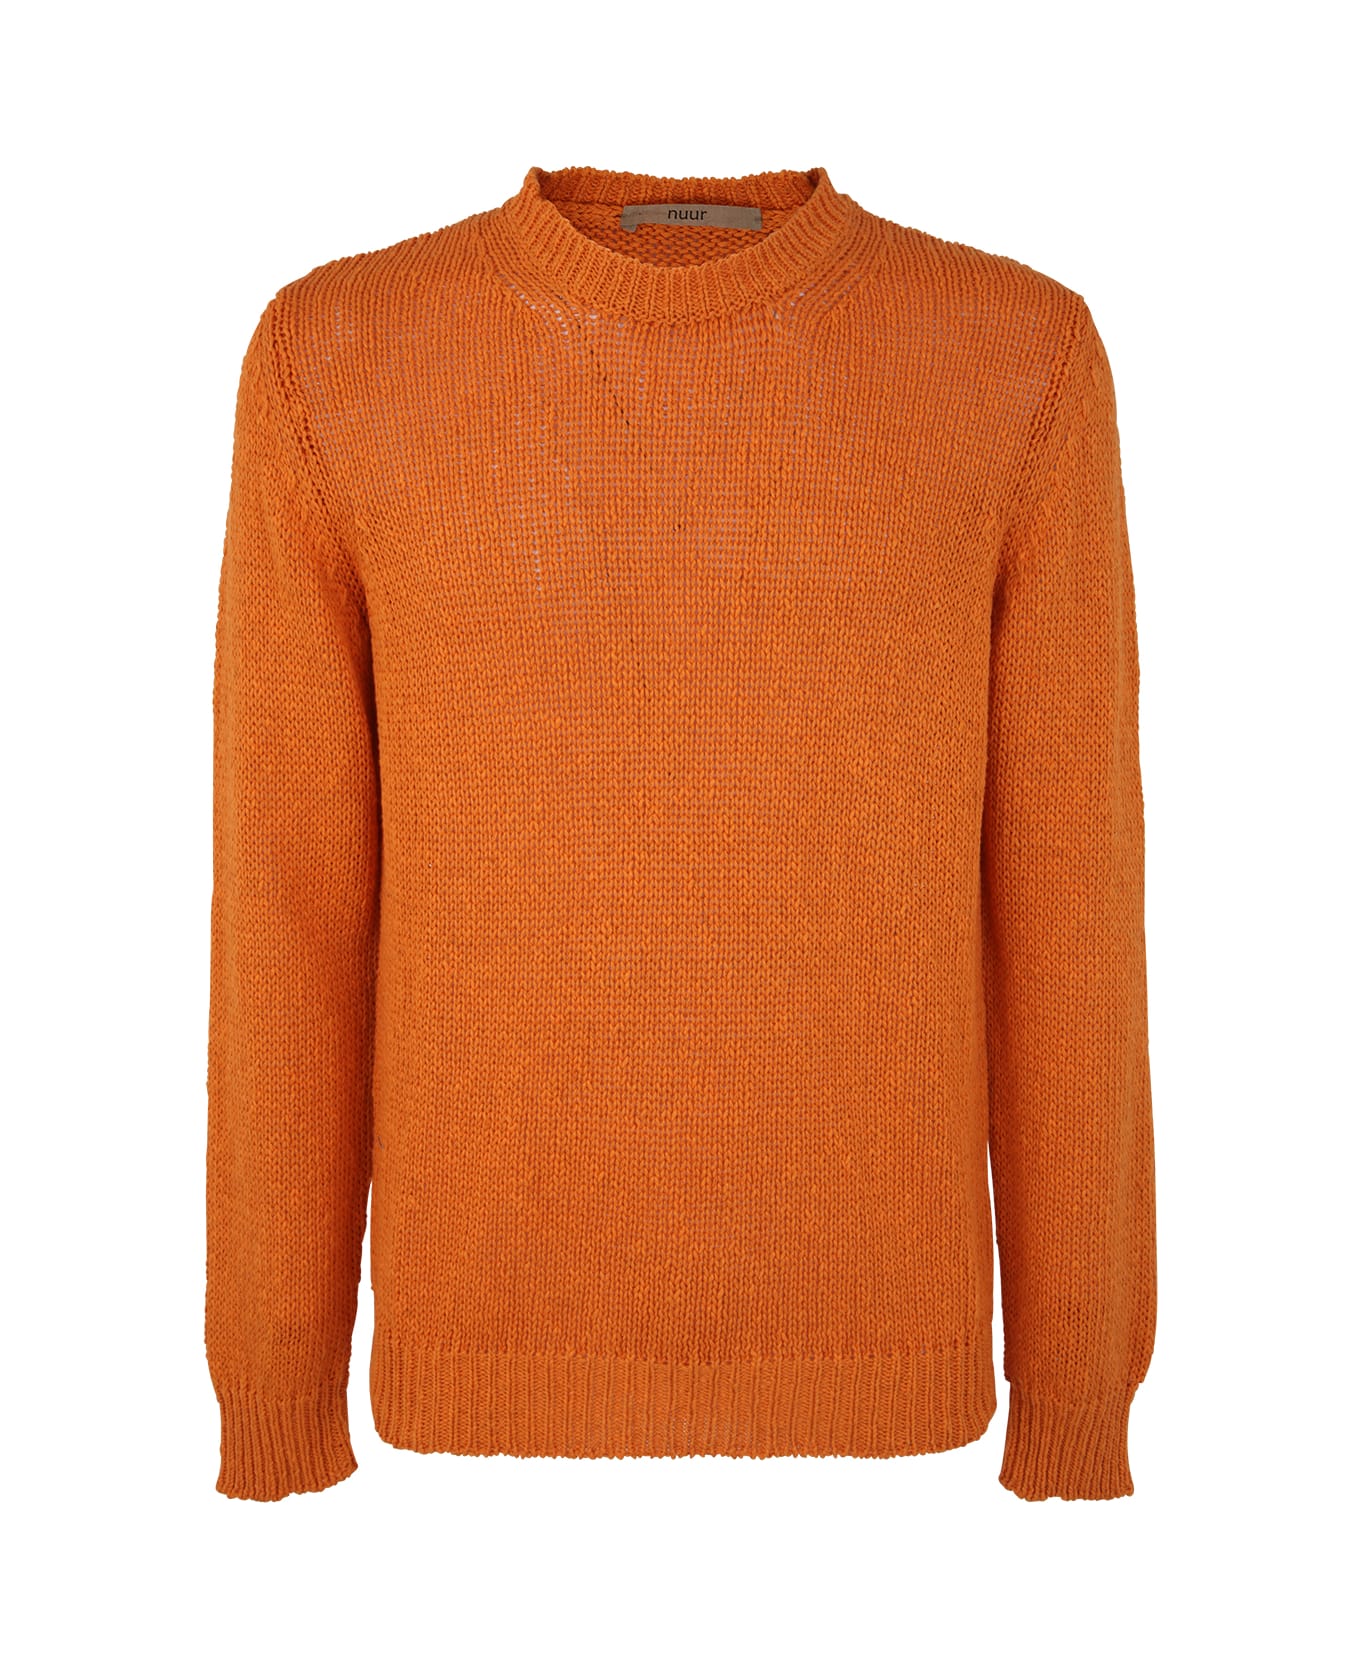 Nuur Regular Fit Round Neck Pullover - Orange